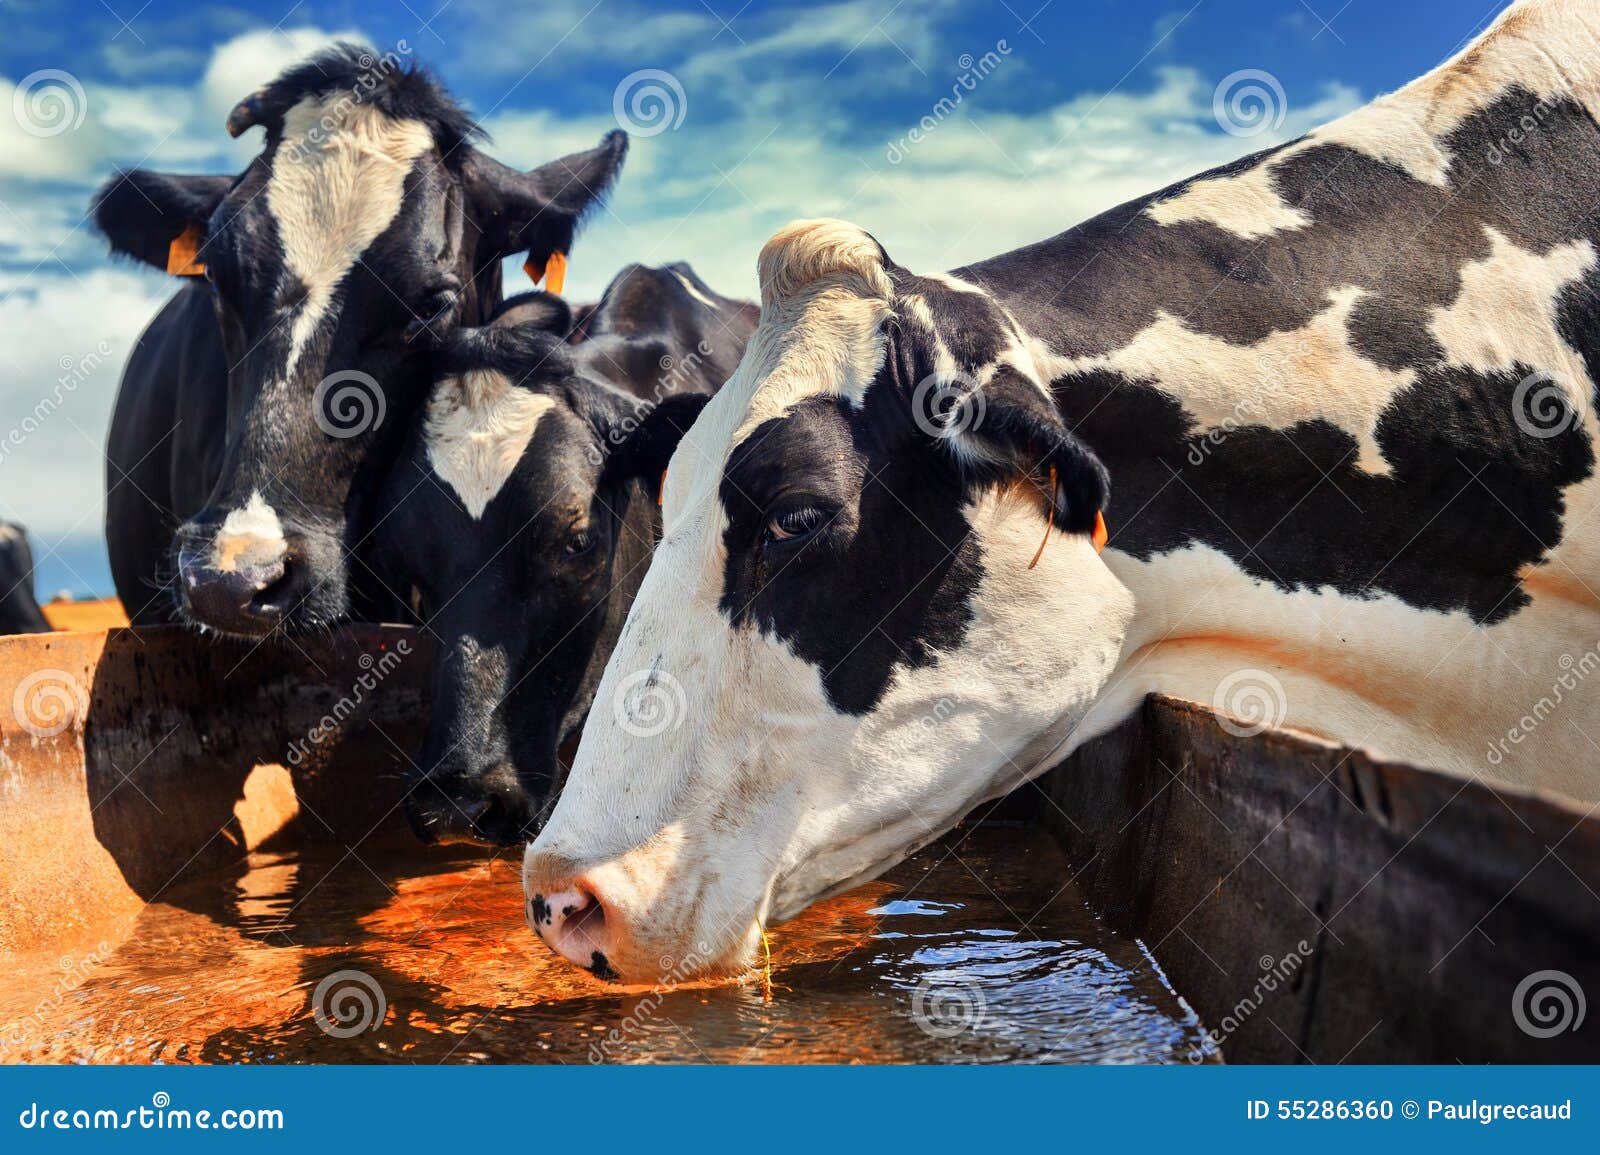 herd of cows drinking water